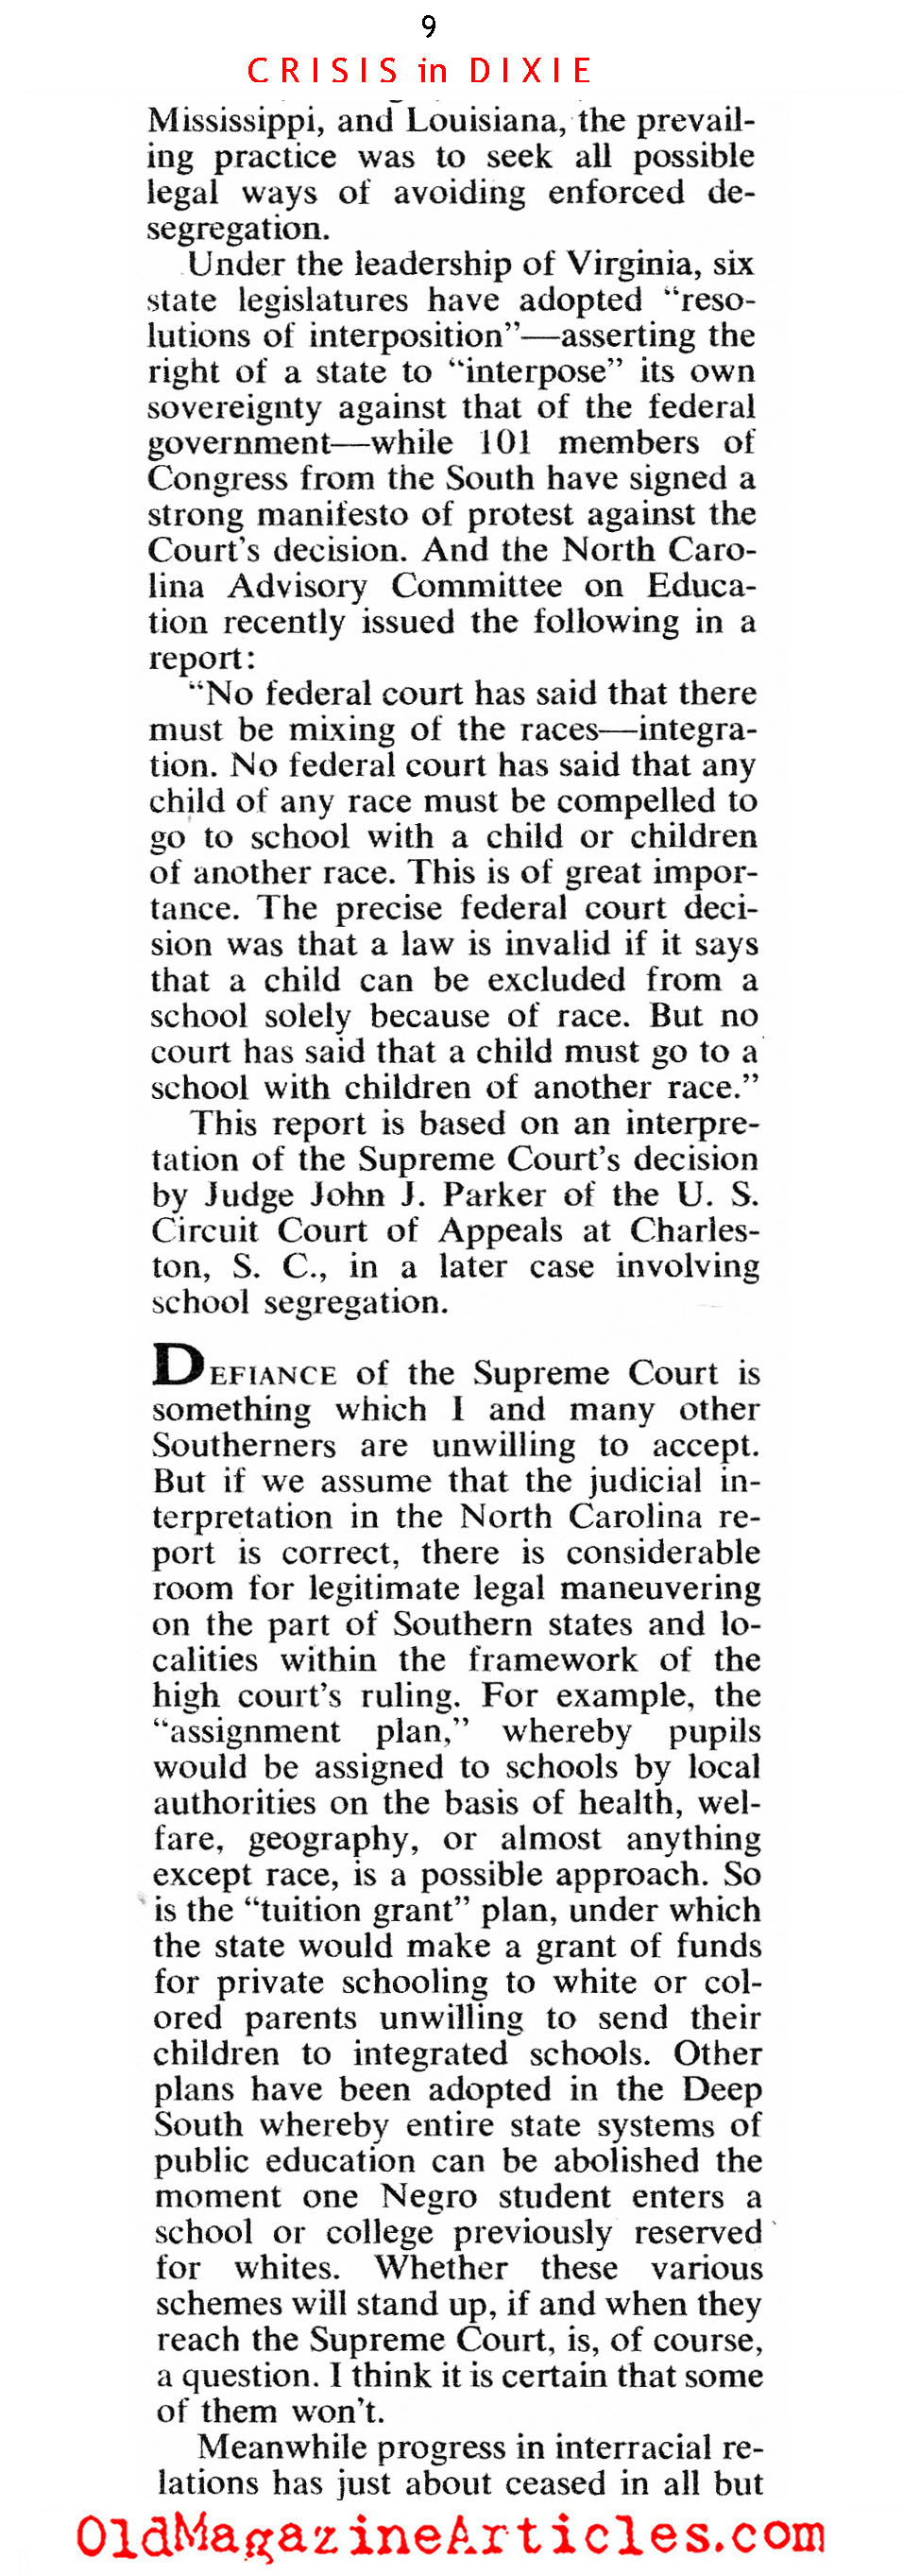 ''School Crises in Dixie'' (American Magazine, 1956)